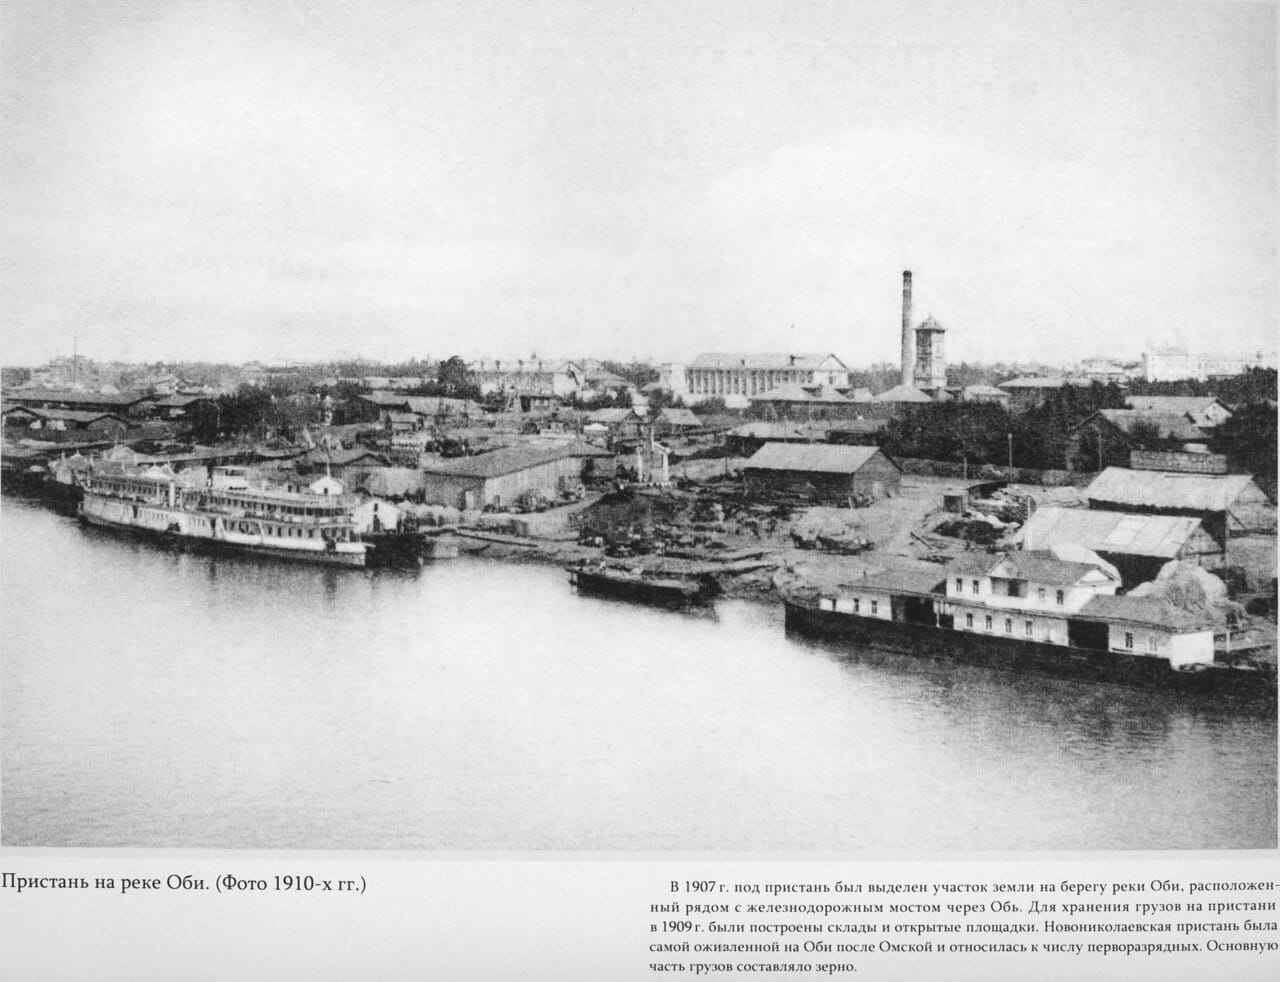 Пристань на реке Оби, 1910-е годы